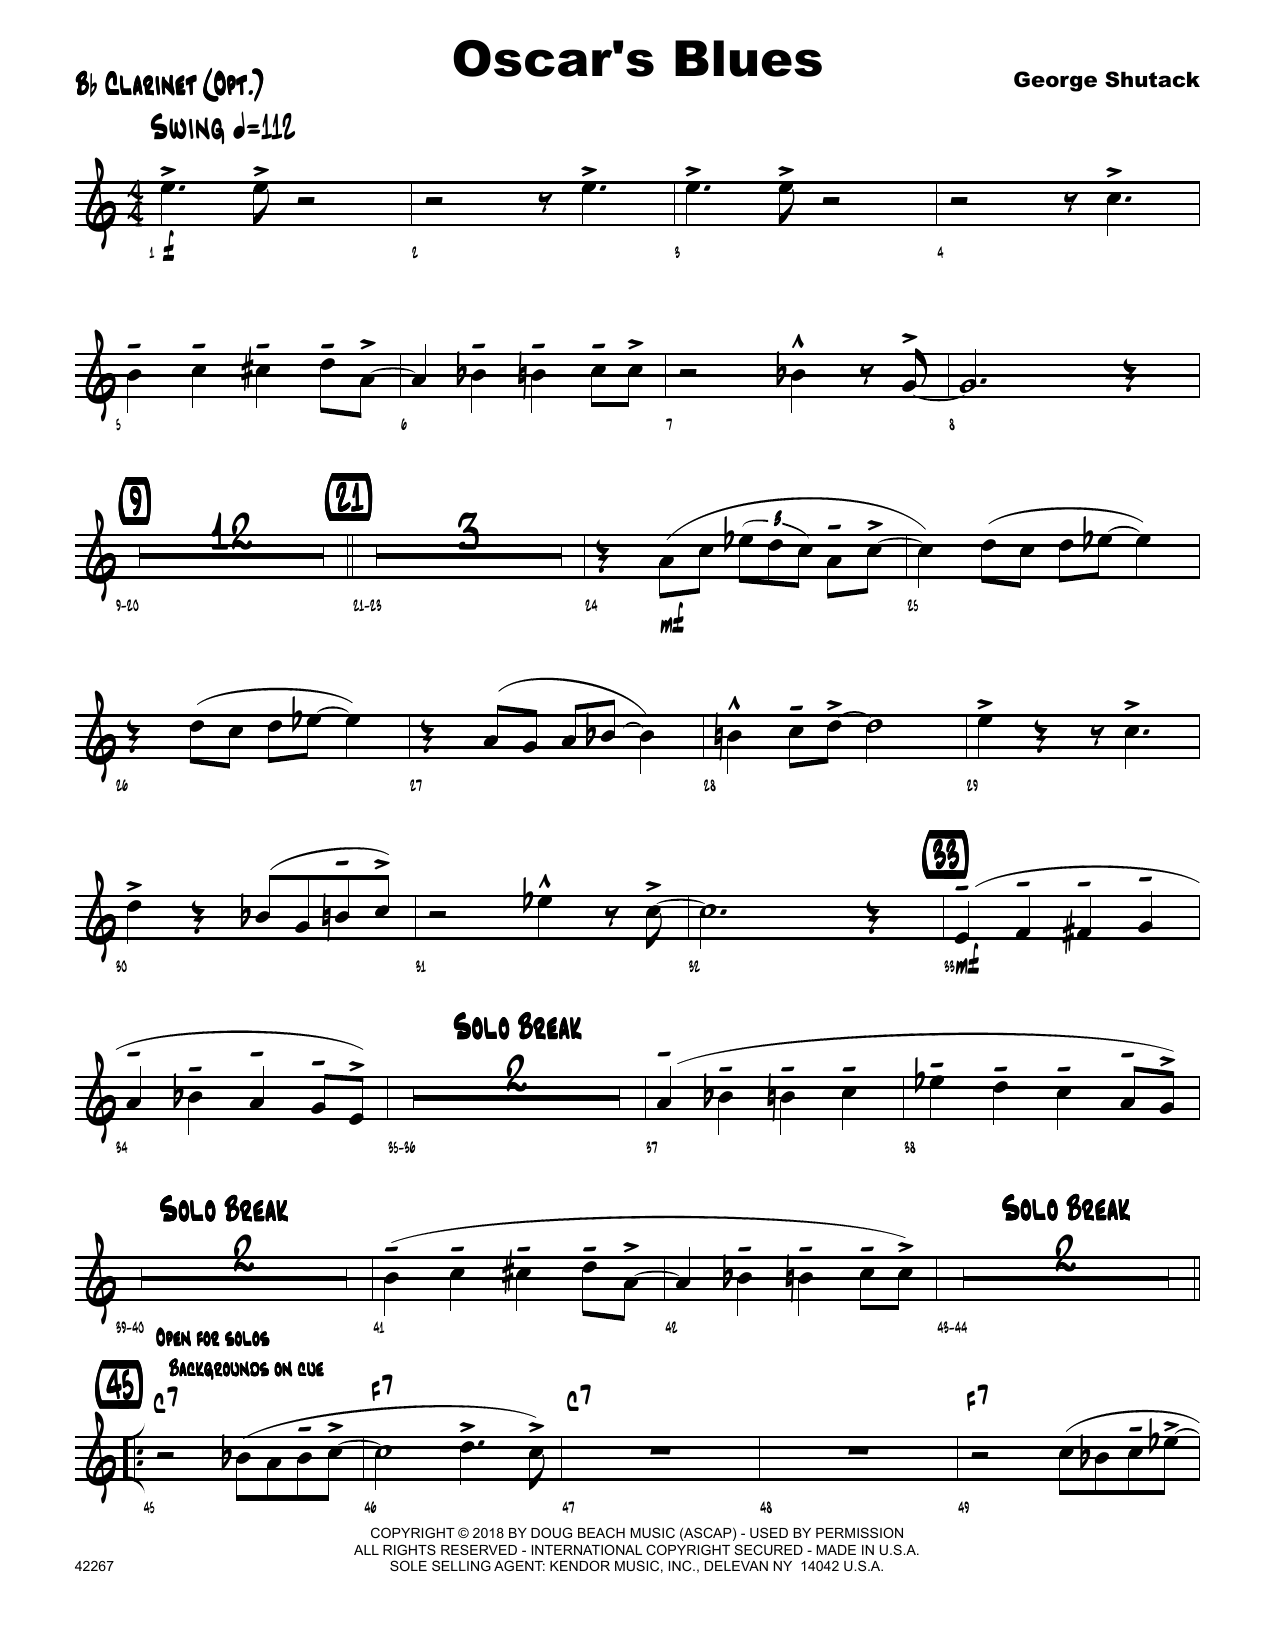 Download George Shutack Oscar's Blues - Bb Clarinet Sheet Music